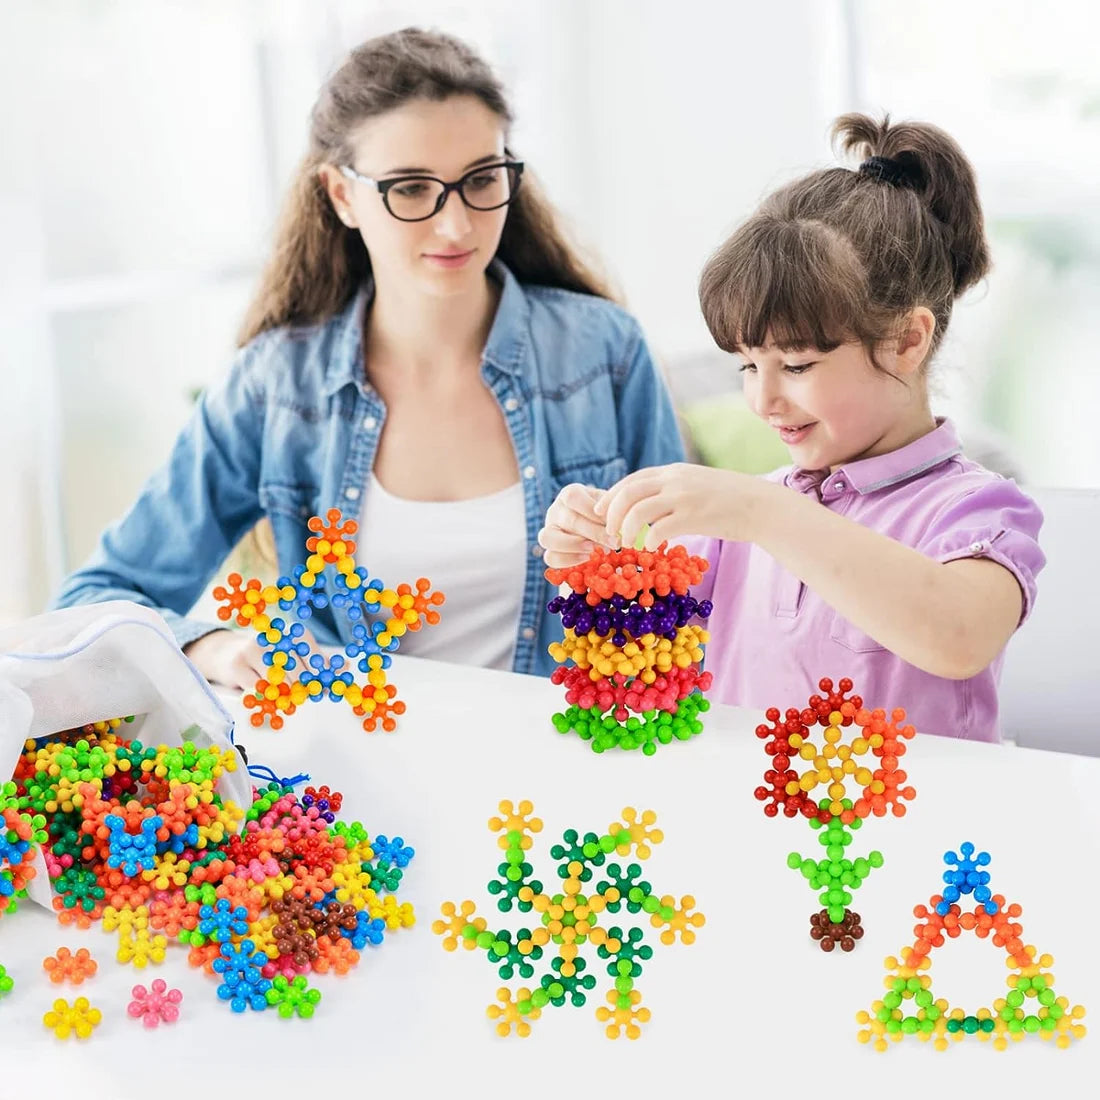 Building Blocks Kids educational toy